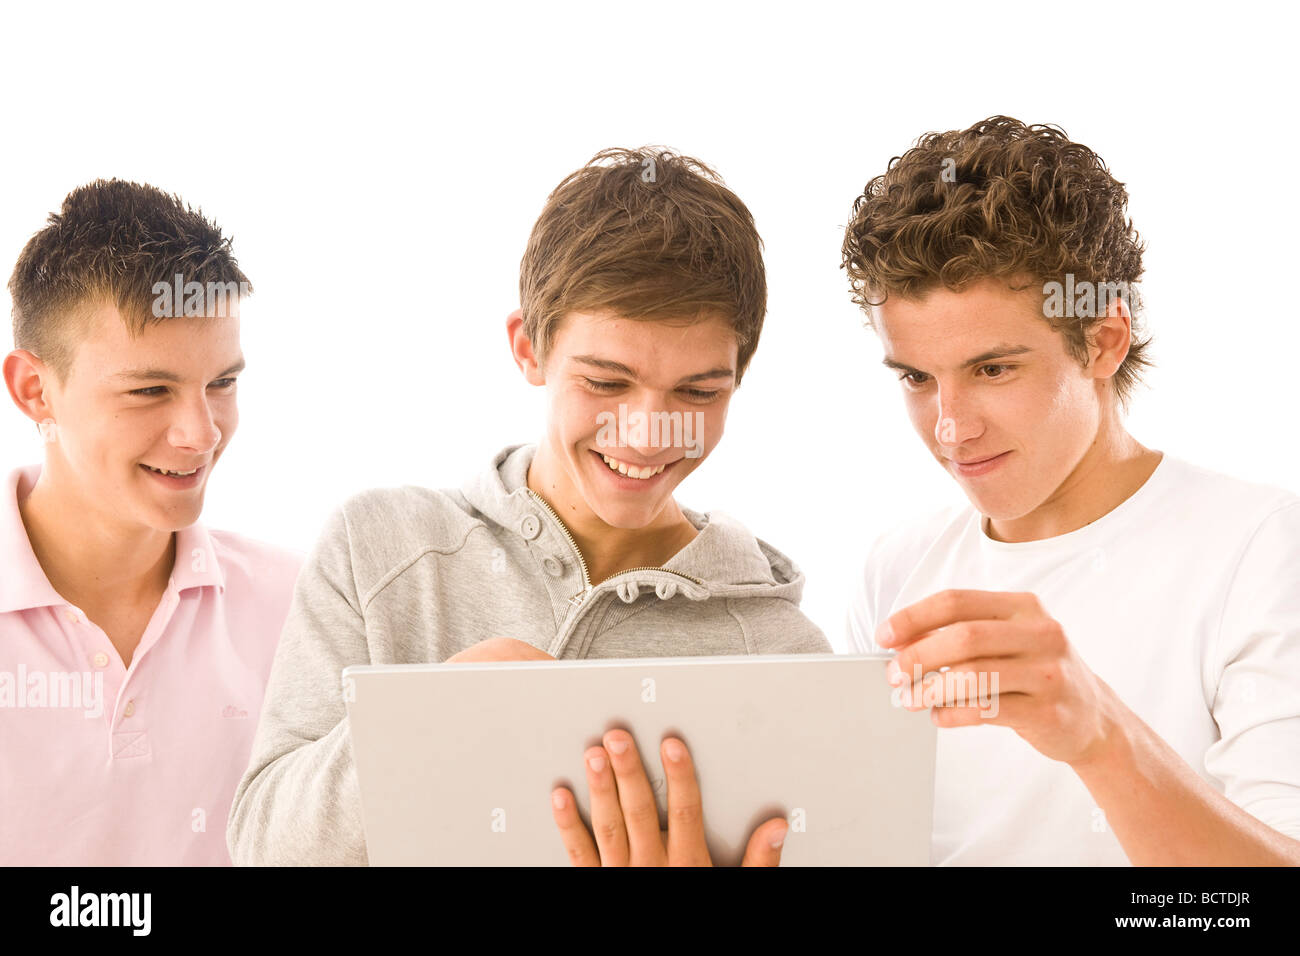 Three boys working on a laptop Stock Photo